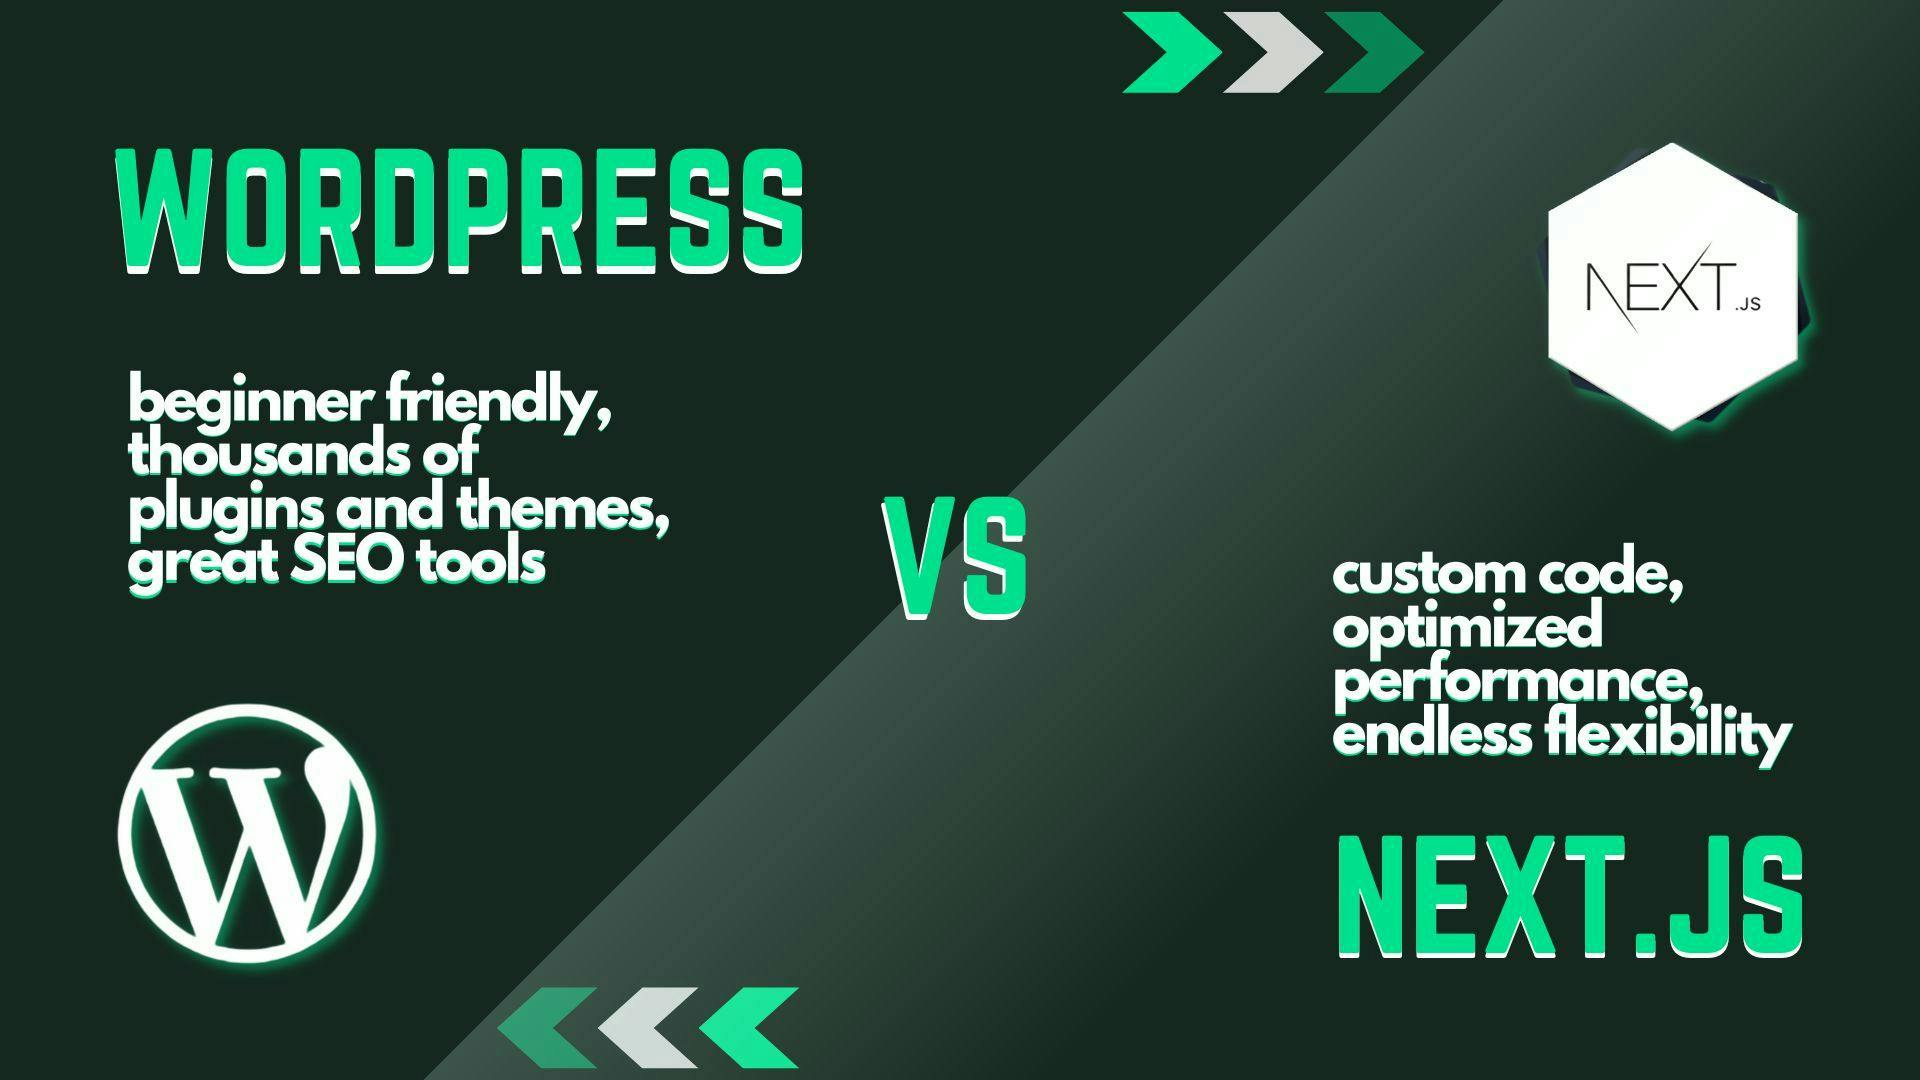 Wordpress vs Next.js